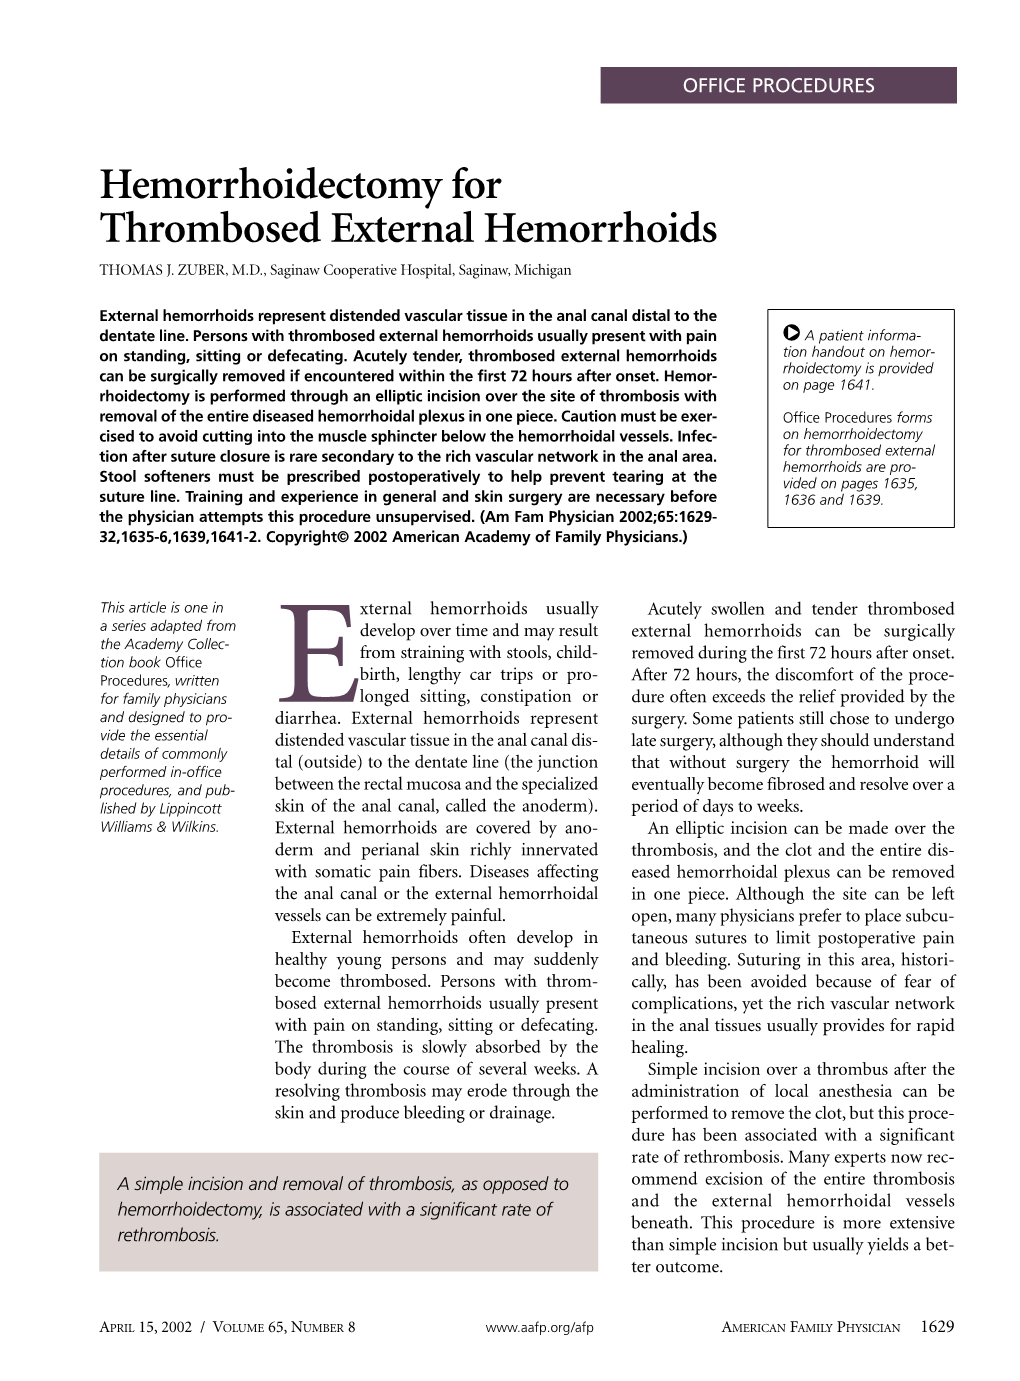 Hemorrhoidectomy for Thrombosed External Hemorrhoids -- American